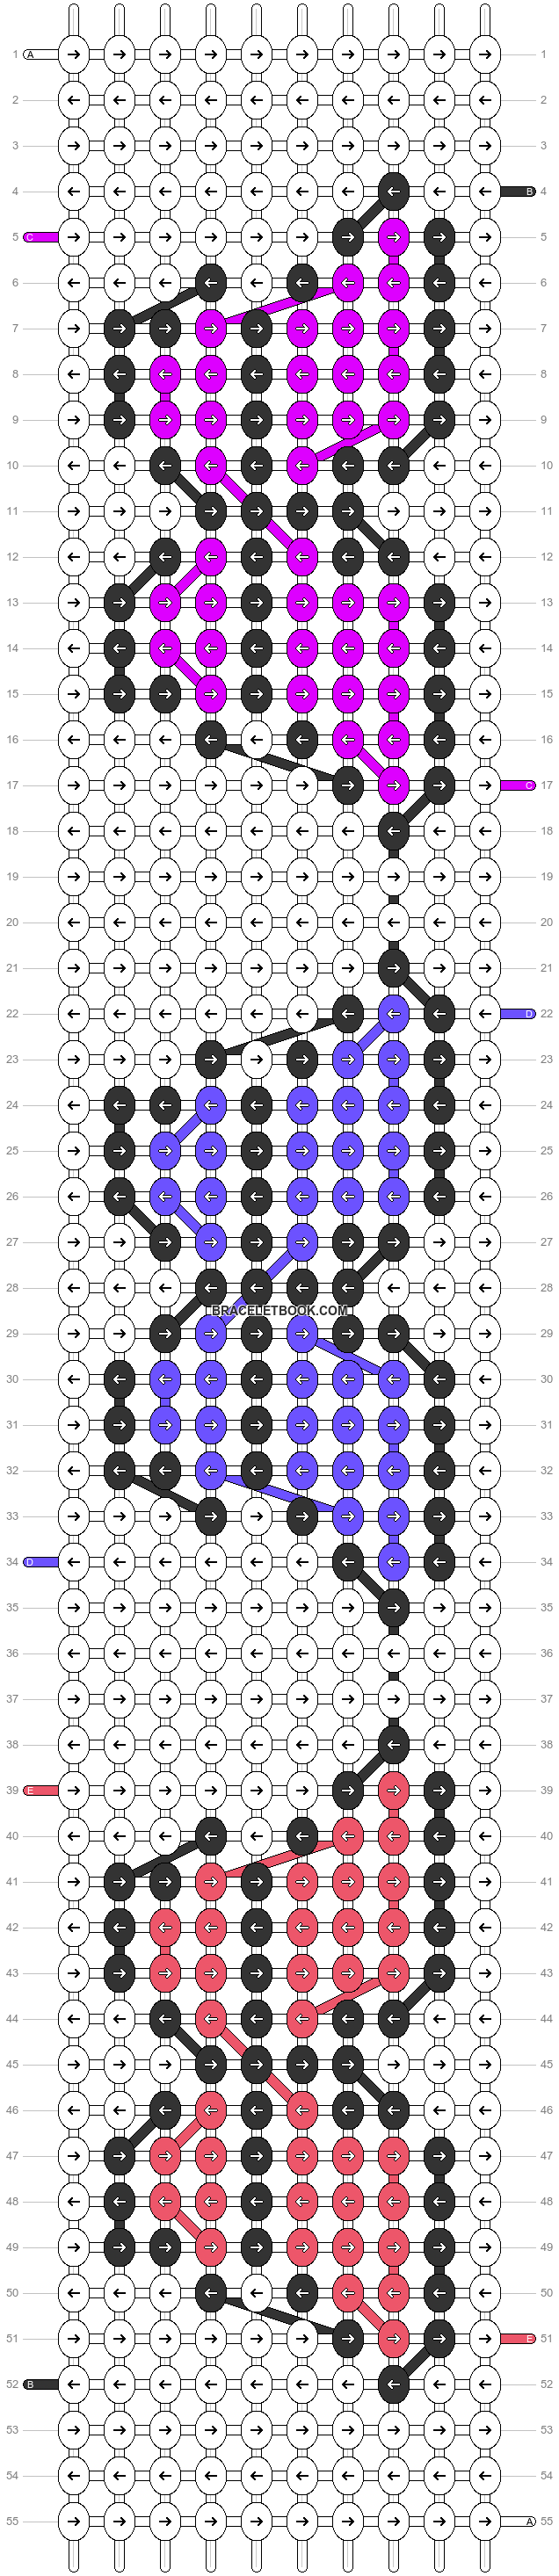 Alpha pattern #49923 variation #92361 pattern